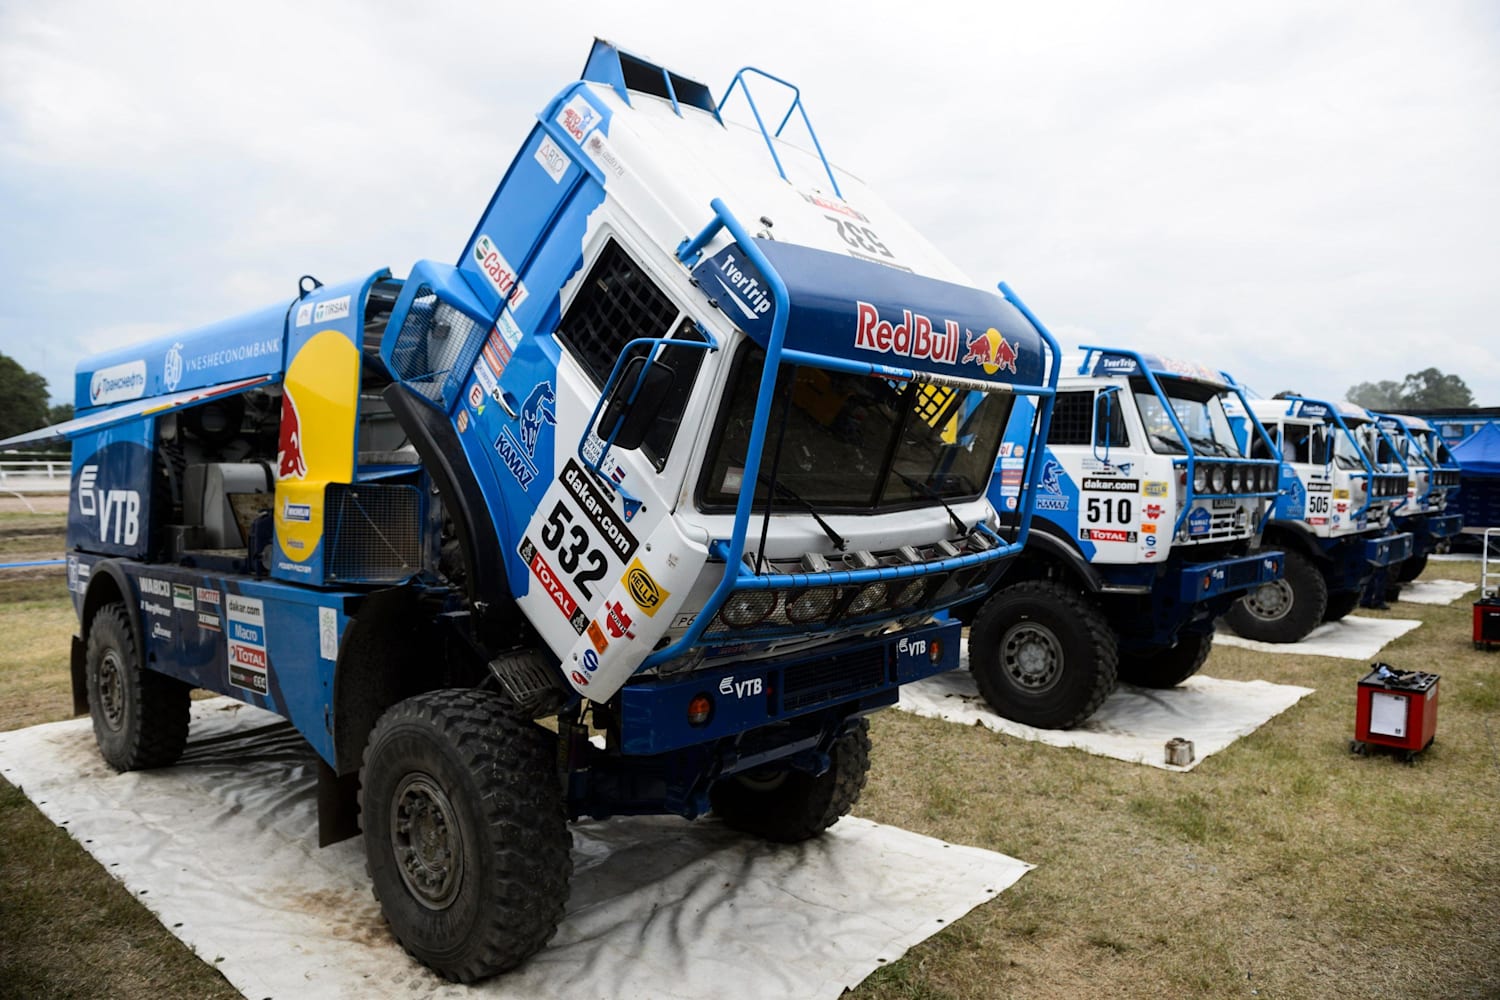 Vladimir Chagin preps the Kamaz 4326 for Dakar